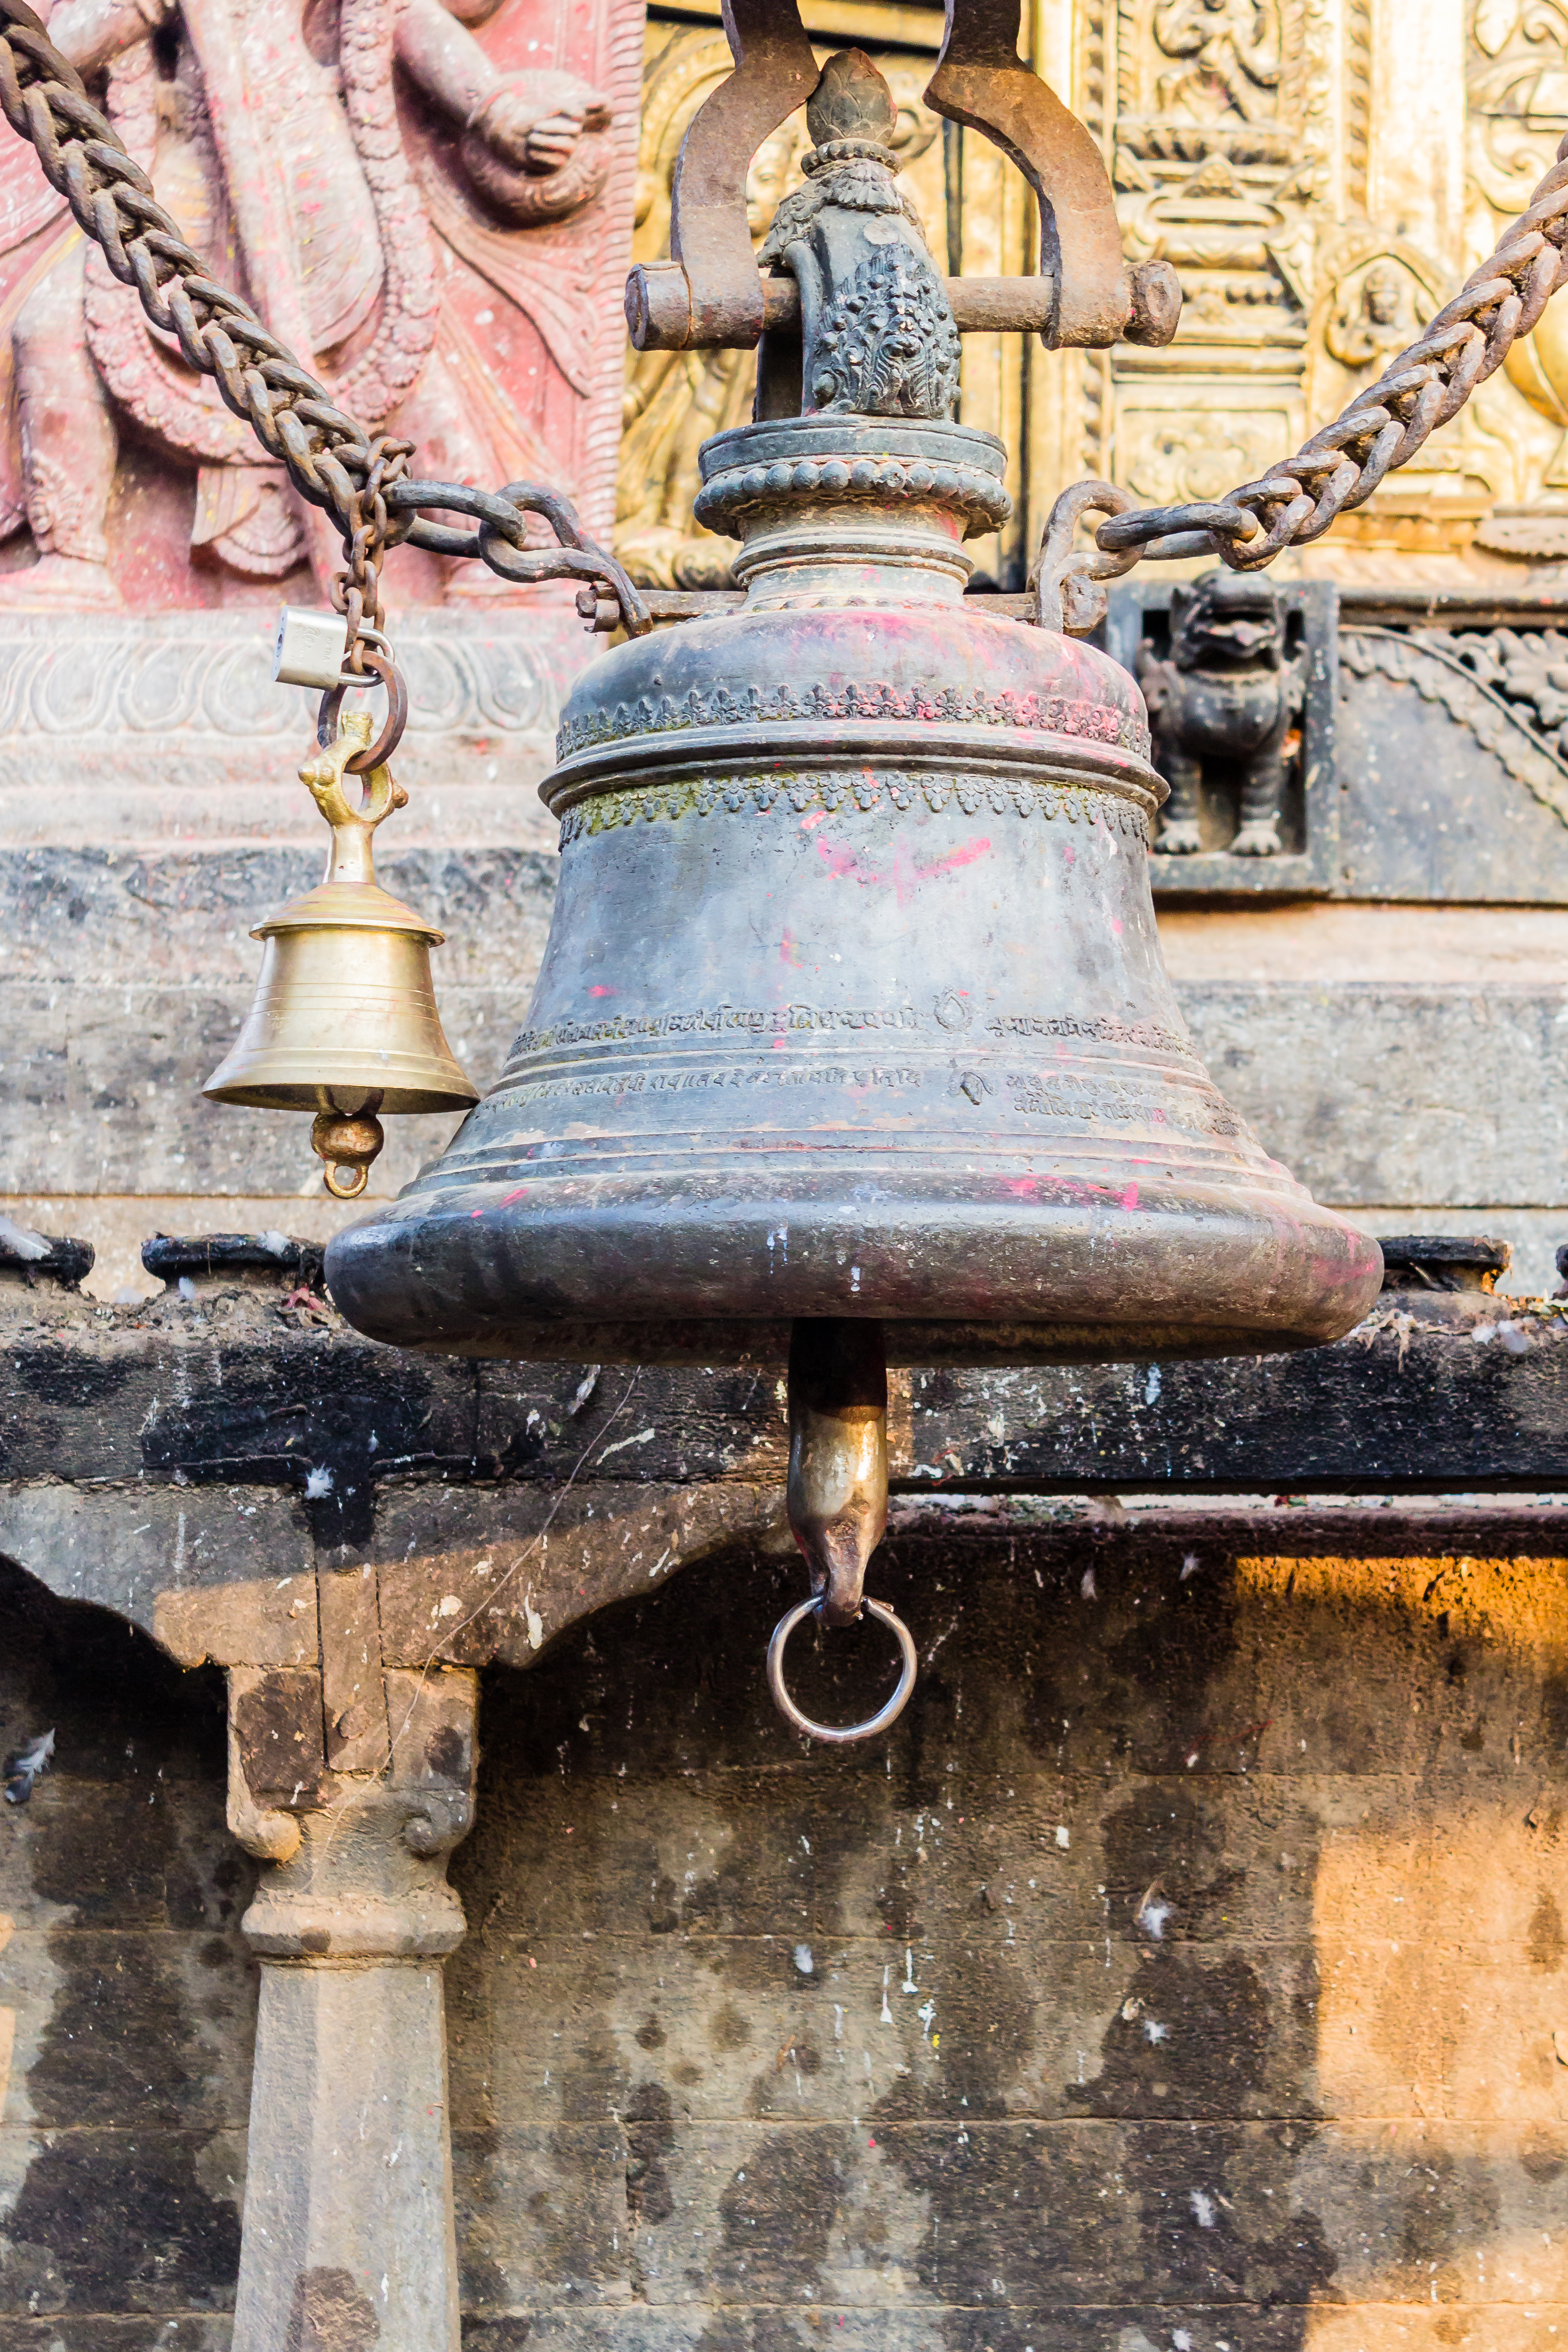 Tibetan Bells, Some tibetan bells I have in the entrance of…